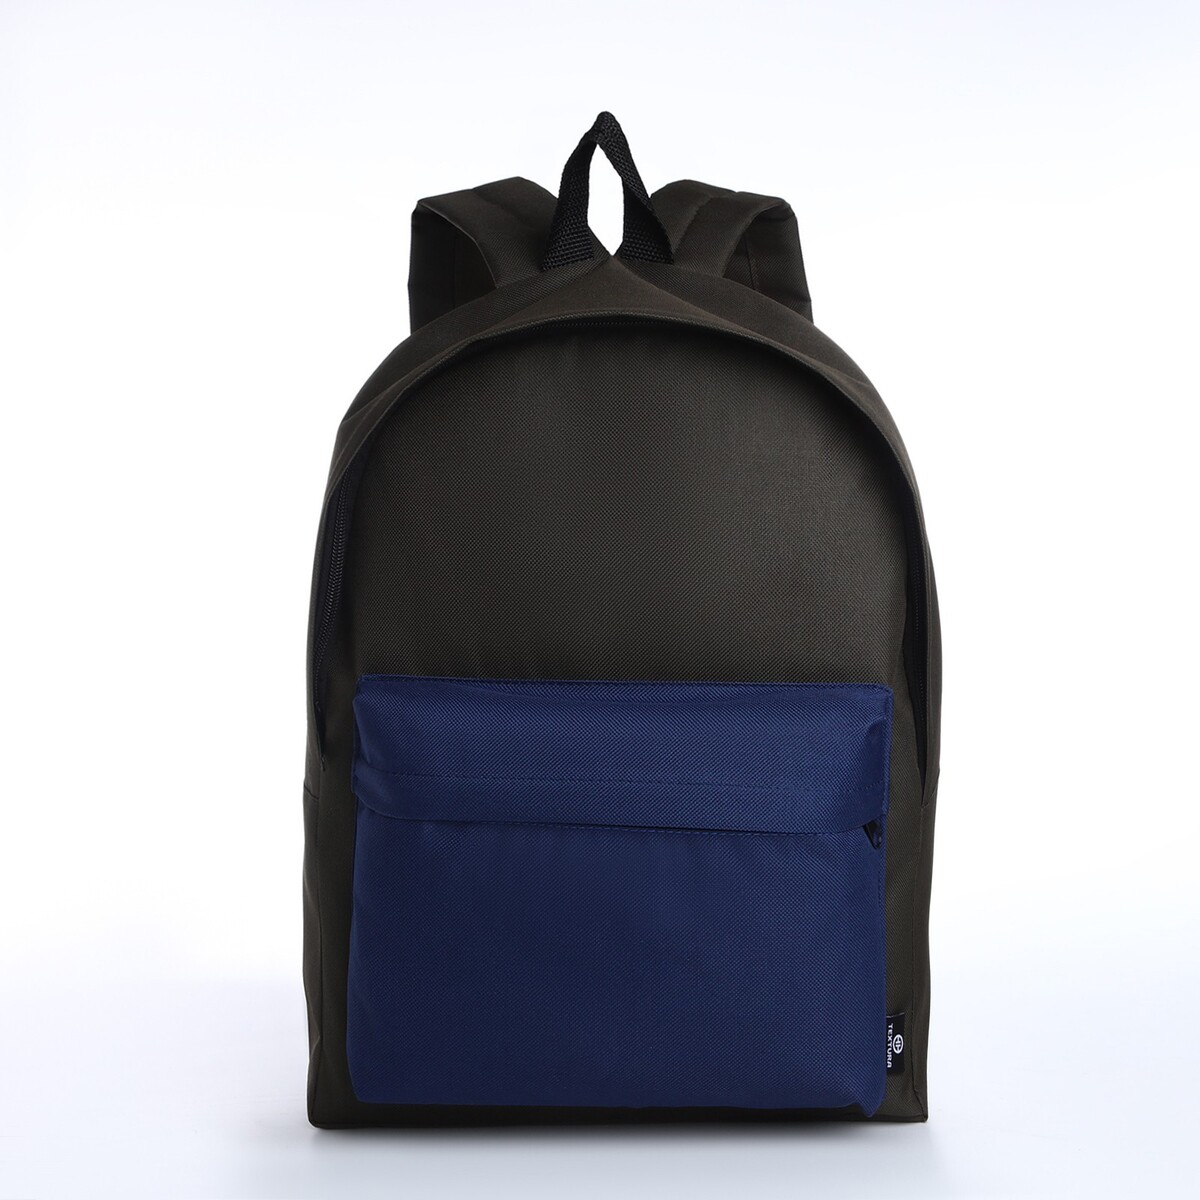 Спортивный рюкзак из текстиля на молнии textura, 20 литров, цвет хаки/синий спортивный рюкзак из текстиля на молнии textura 20 литров хаки